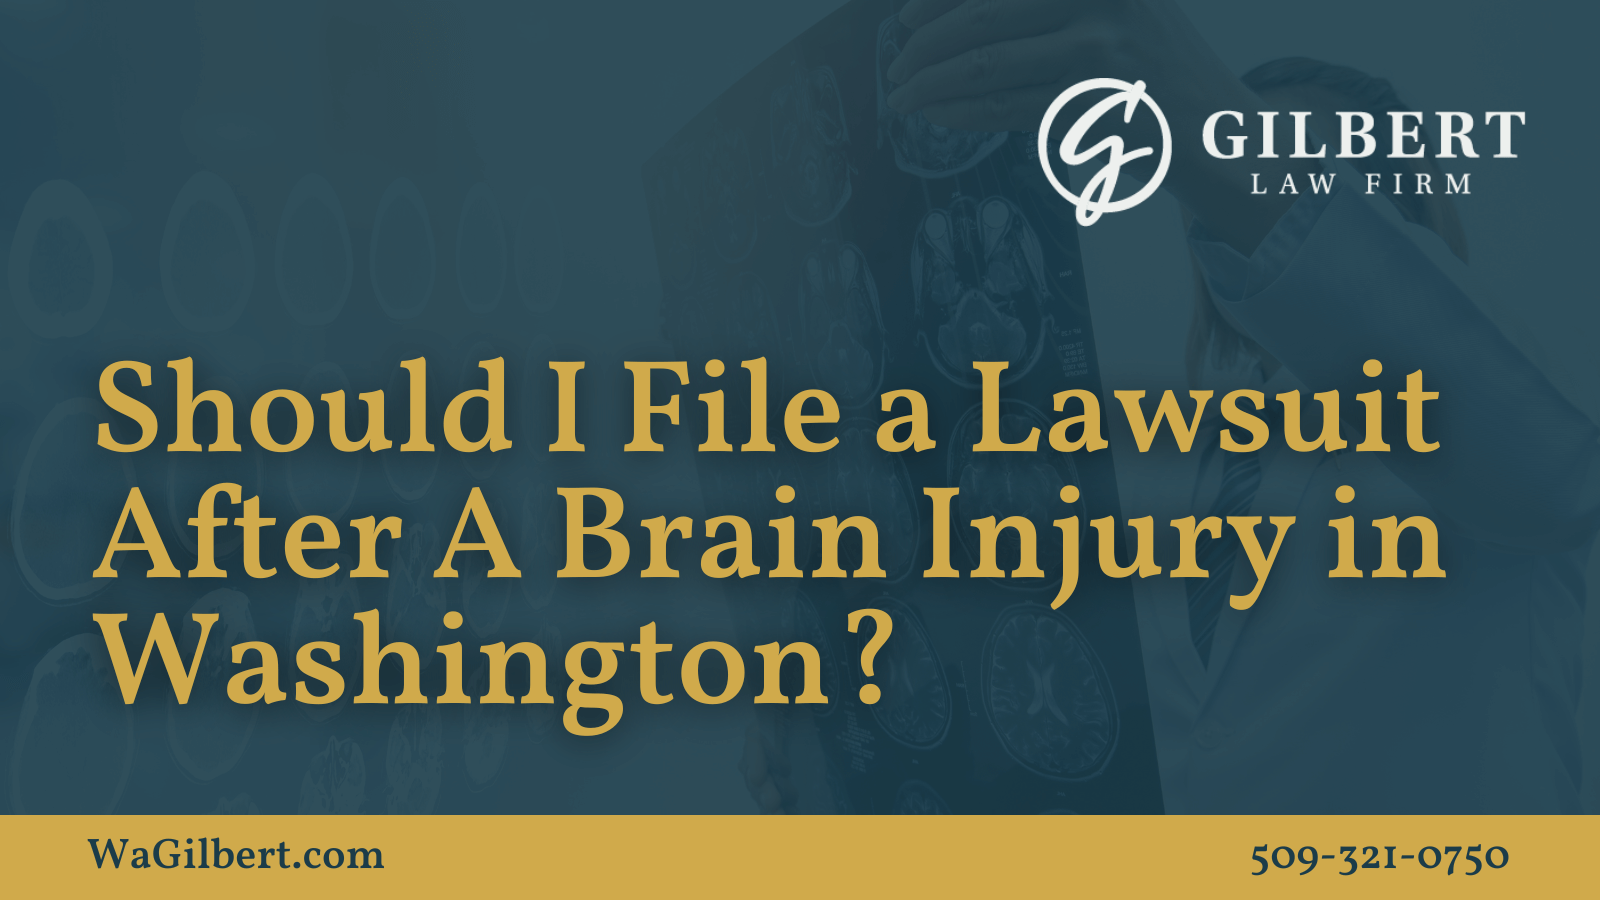 Should I File a Lawsuit After A Brain Injury in Washington | Gilbert Law Firm Spokane Washington